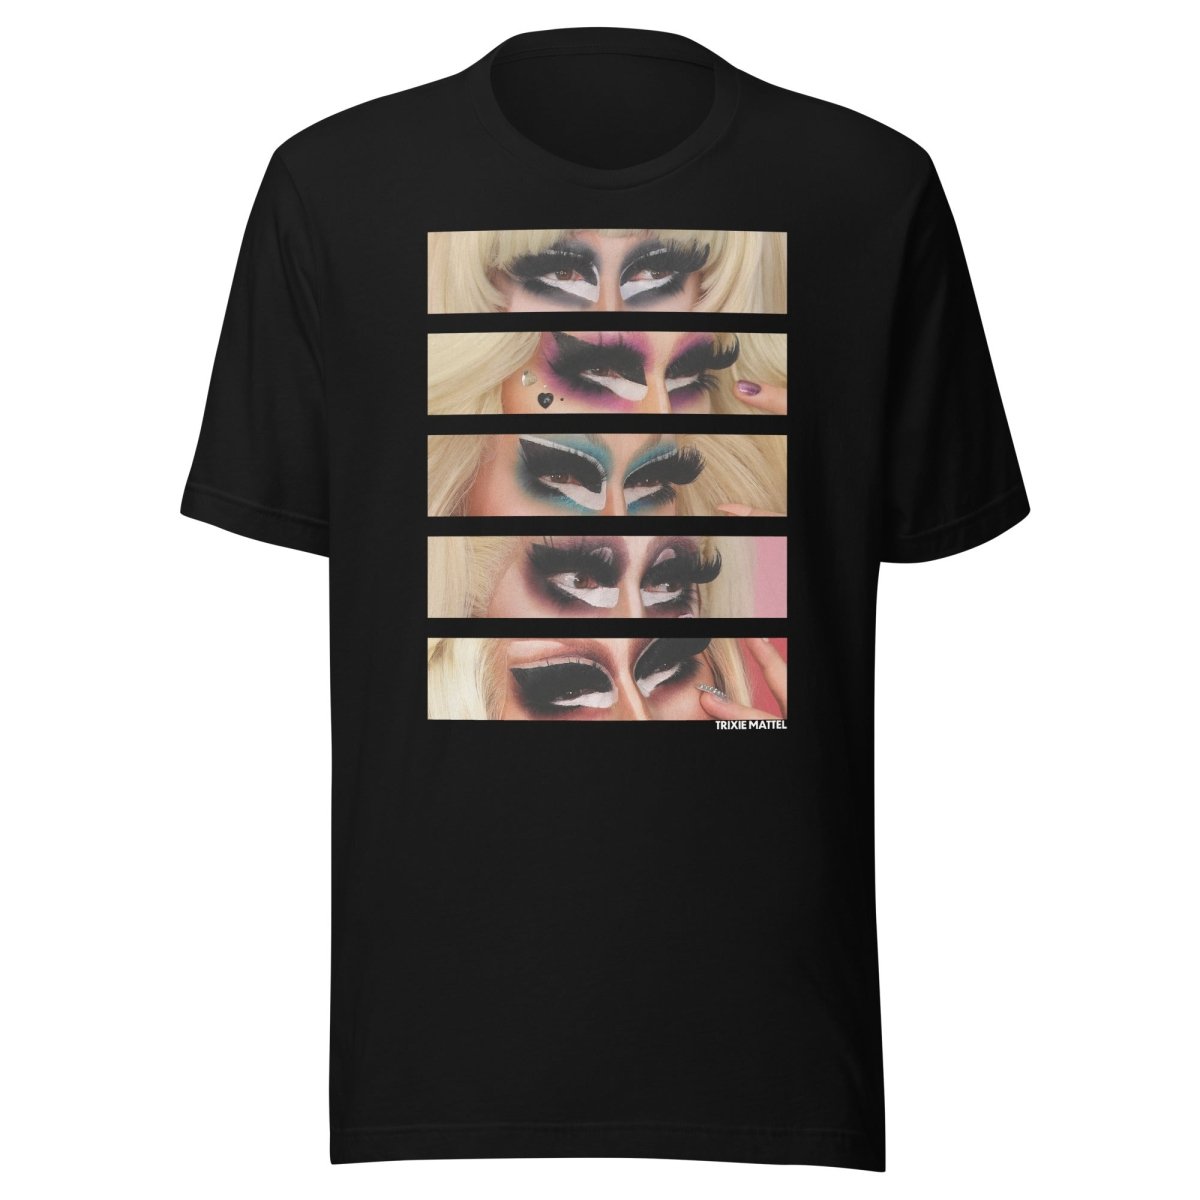 Trixie Mattel. - Eyes T-shirt - dragqueenmerch